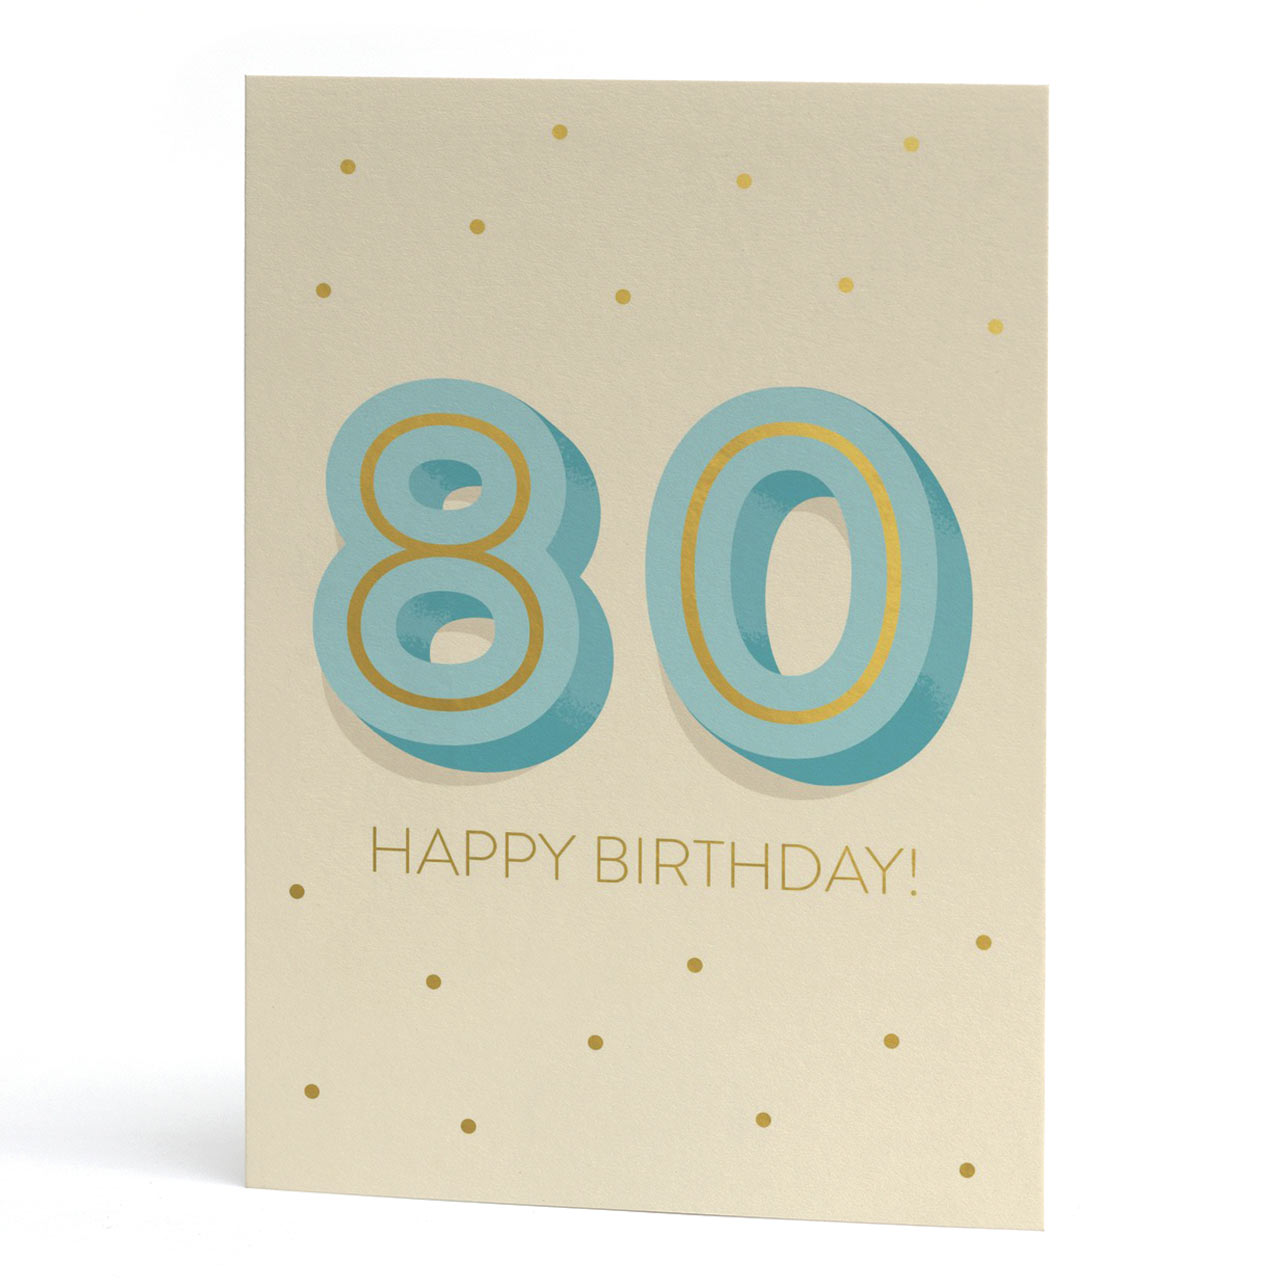 Big 80th Birthday Gold Foil Greeting Card